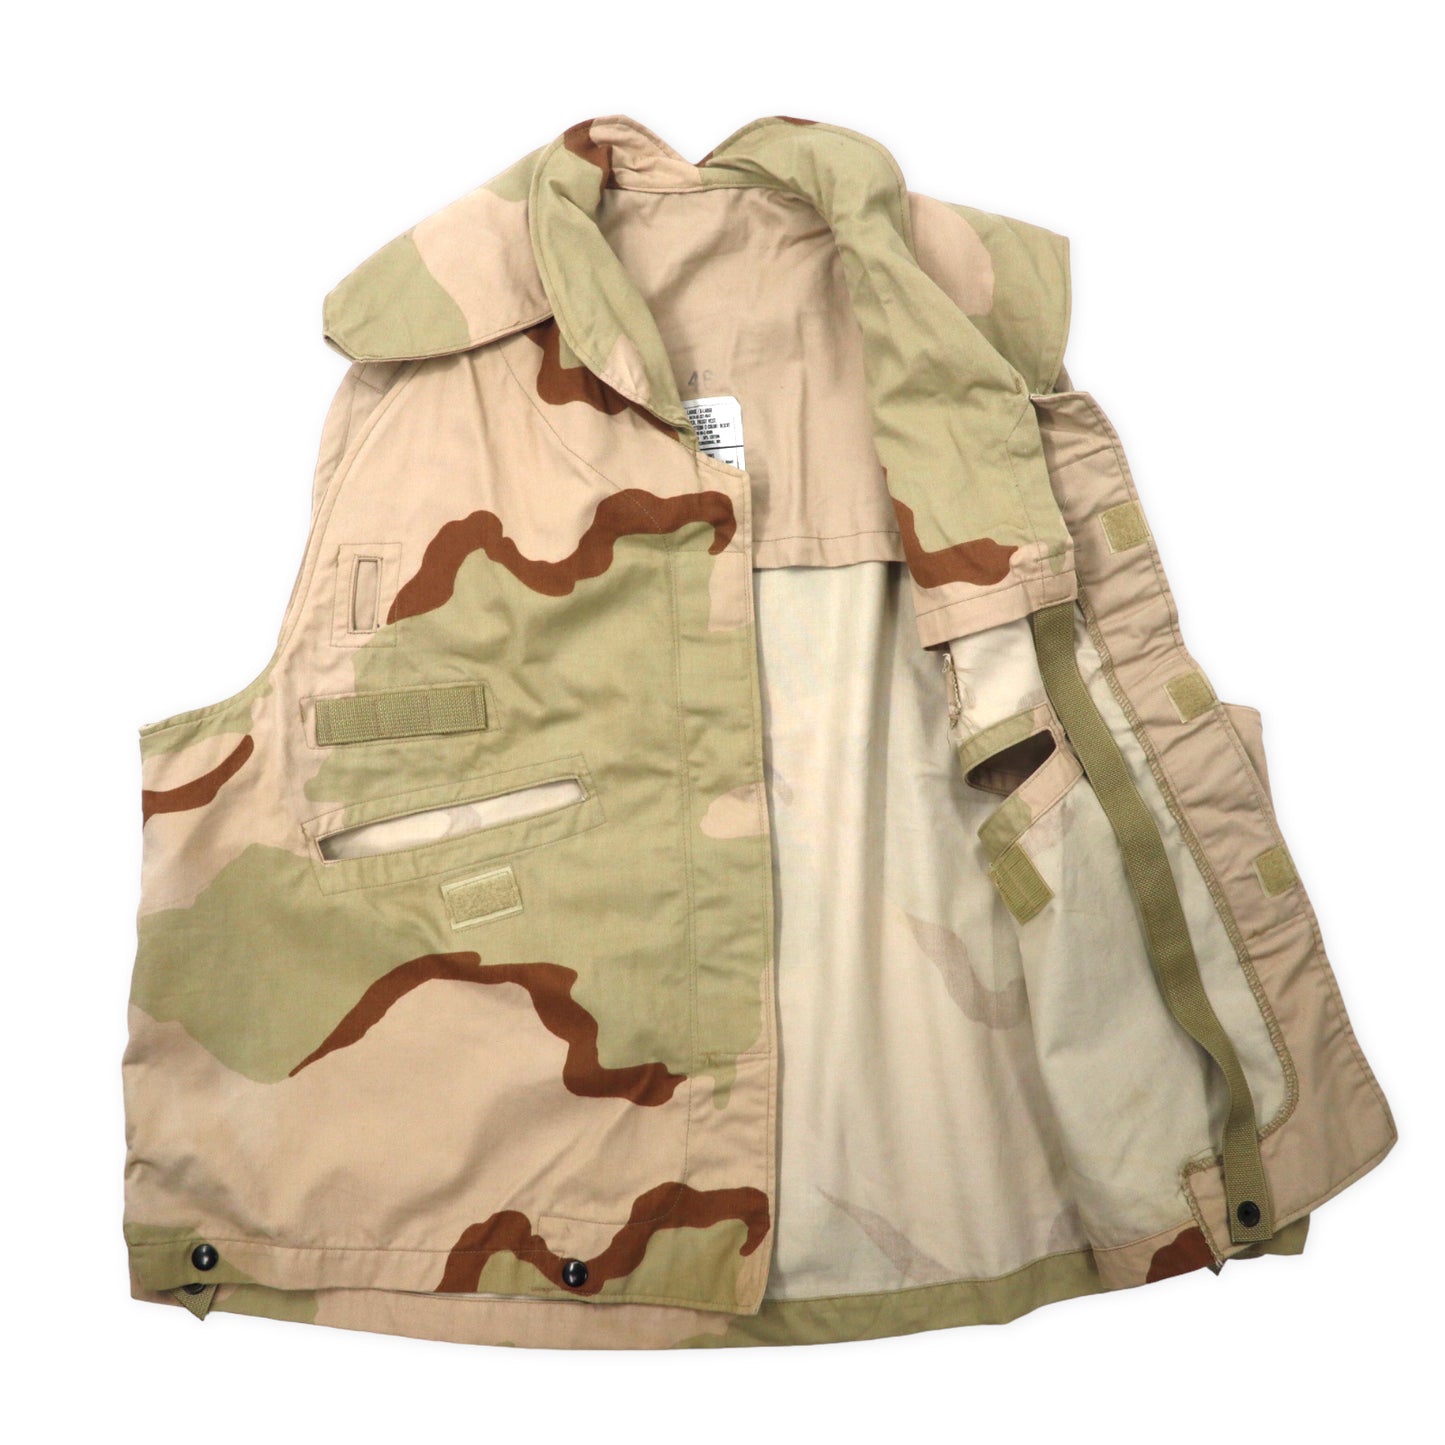 US Army 90s PASGT Body Armor Vest Cover L/XL Khaki Dessert Camoton